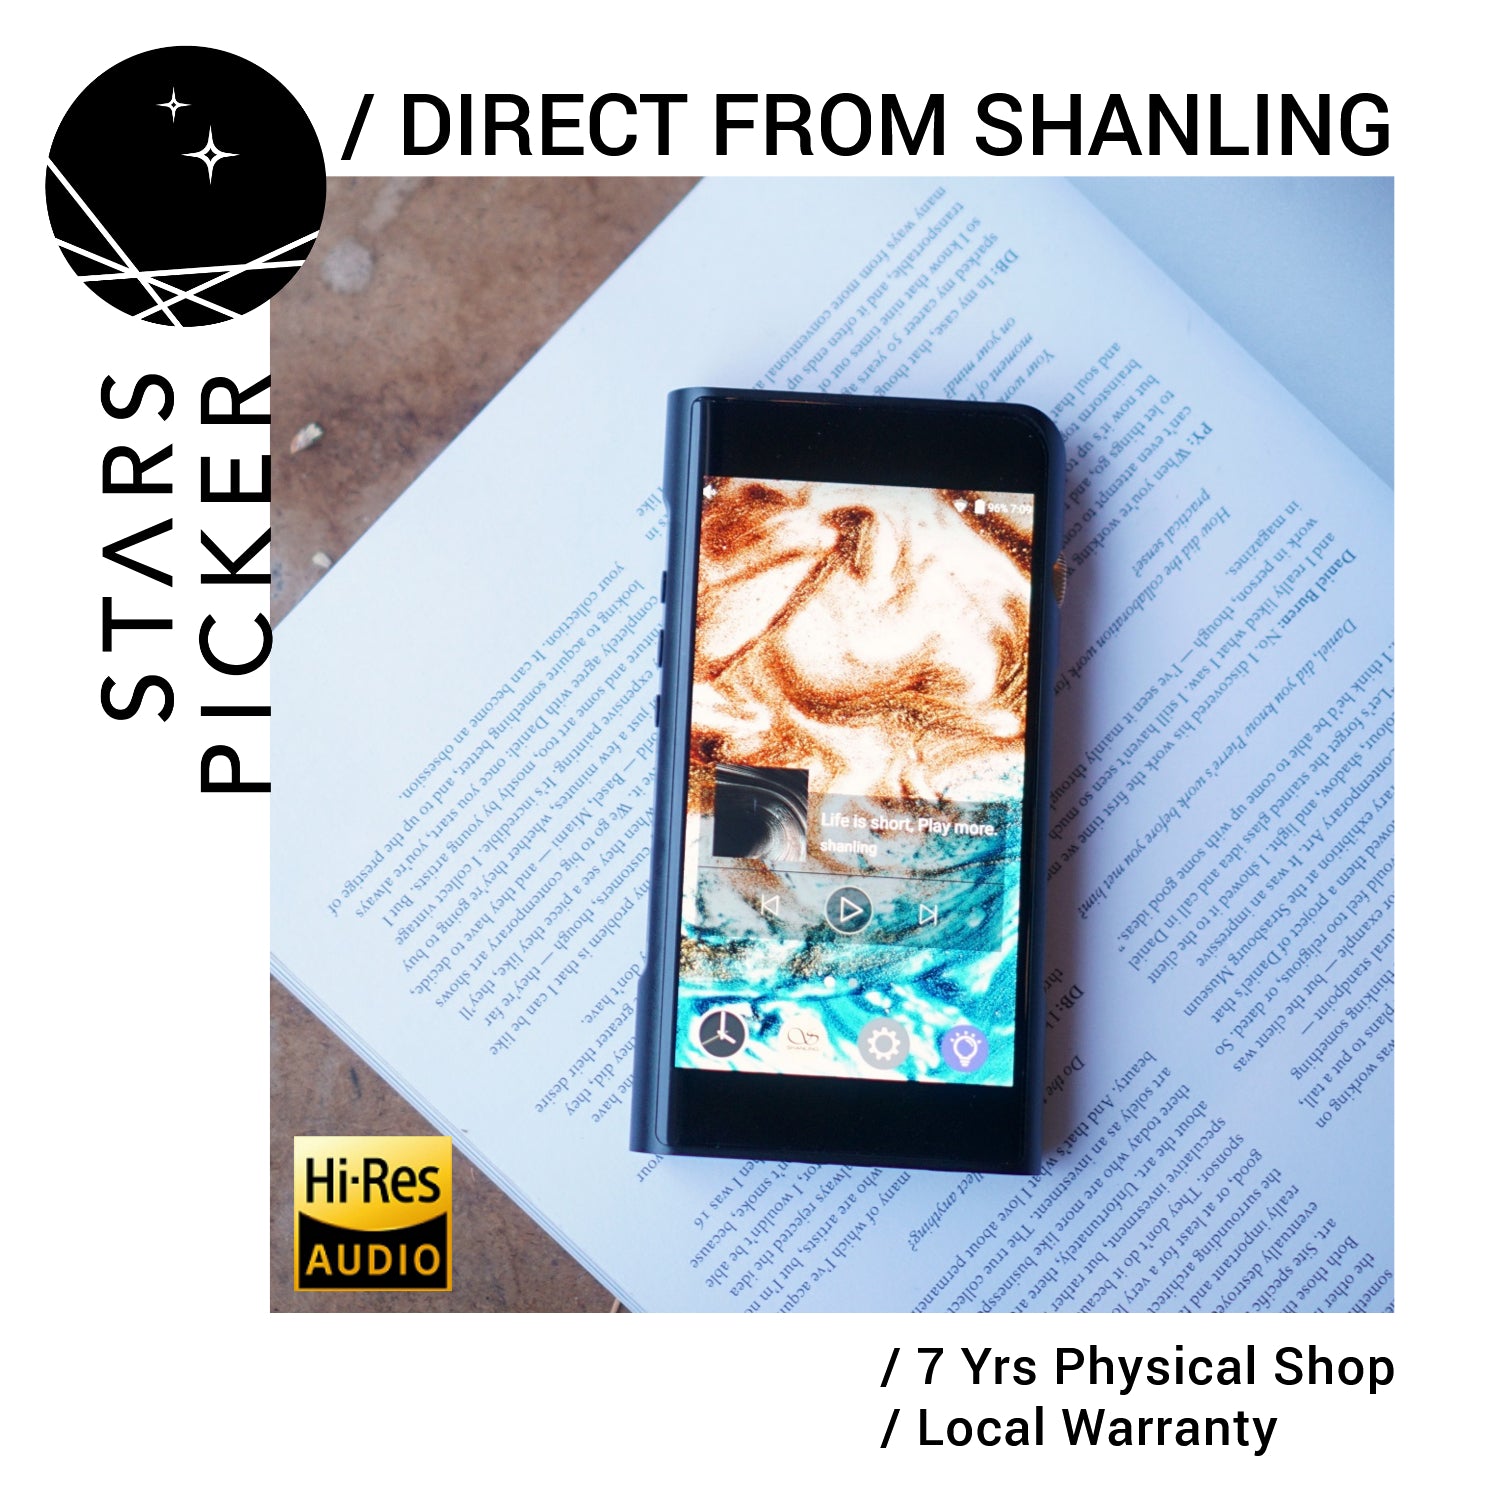 Shanling M6 (21) / M6 2021 - Portable DAP Digital Audio Player Full Android Dual DAC ESS Sabre ES9038Q2M